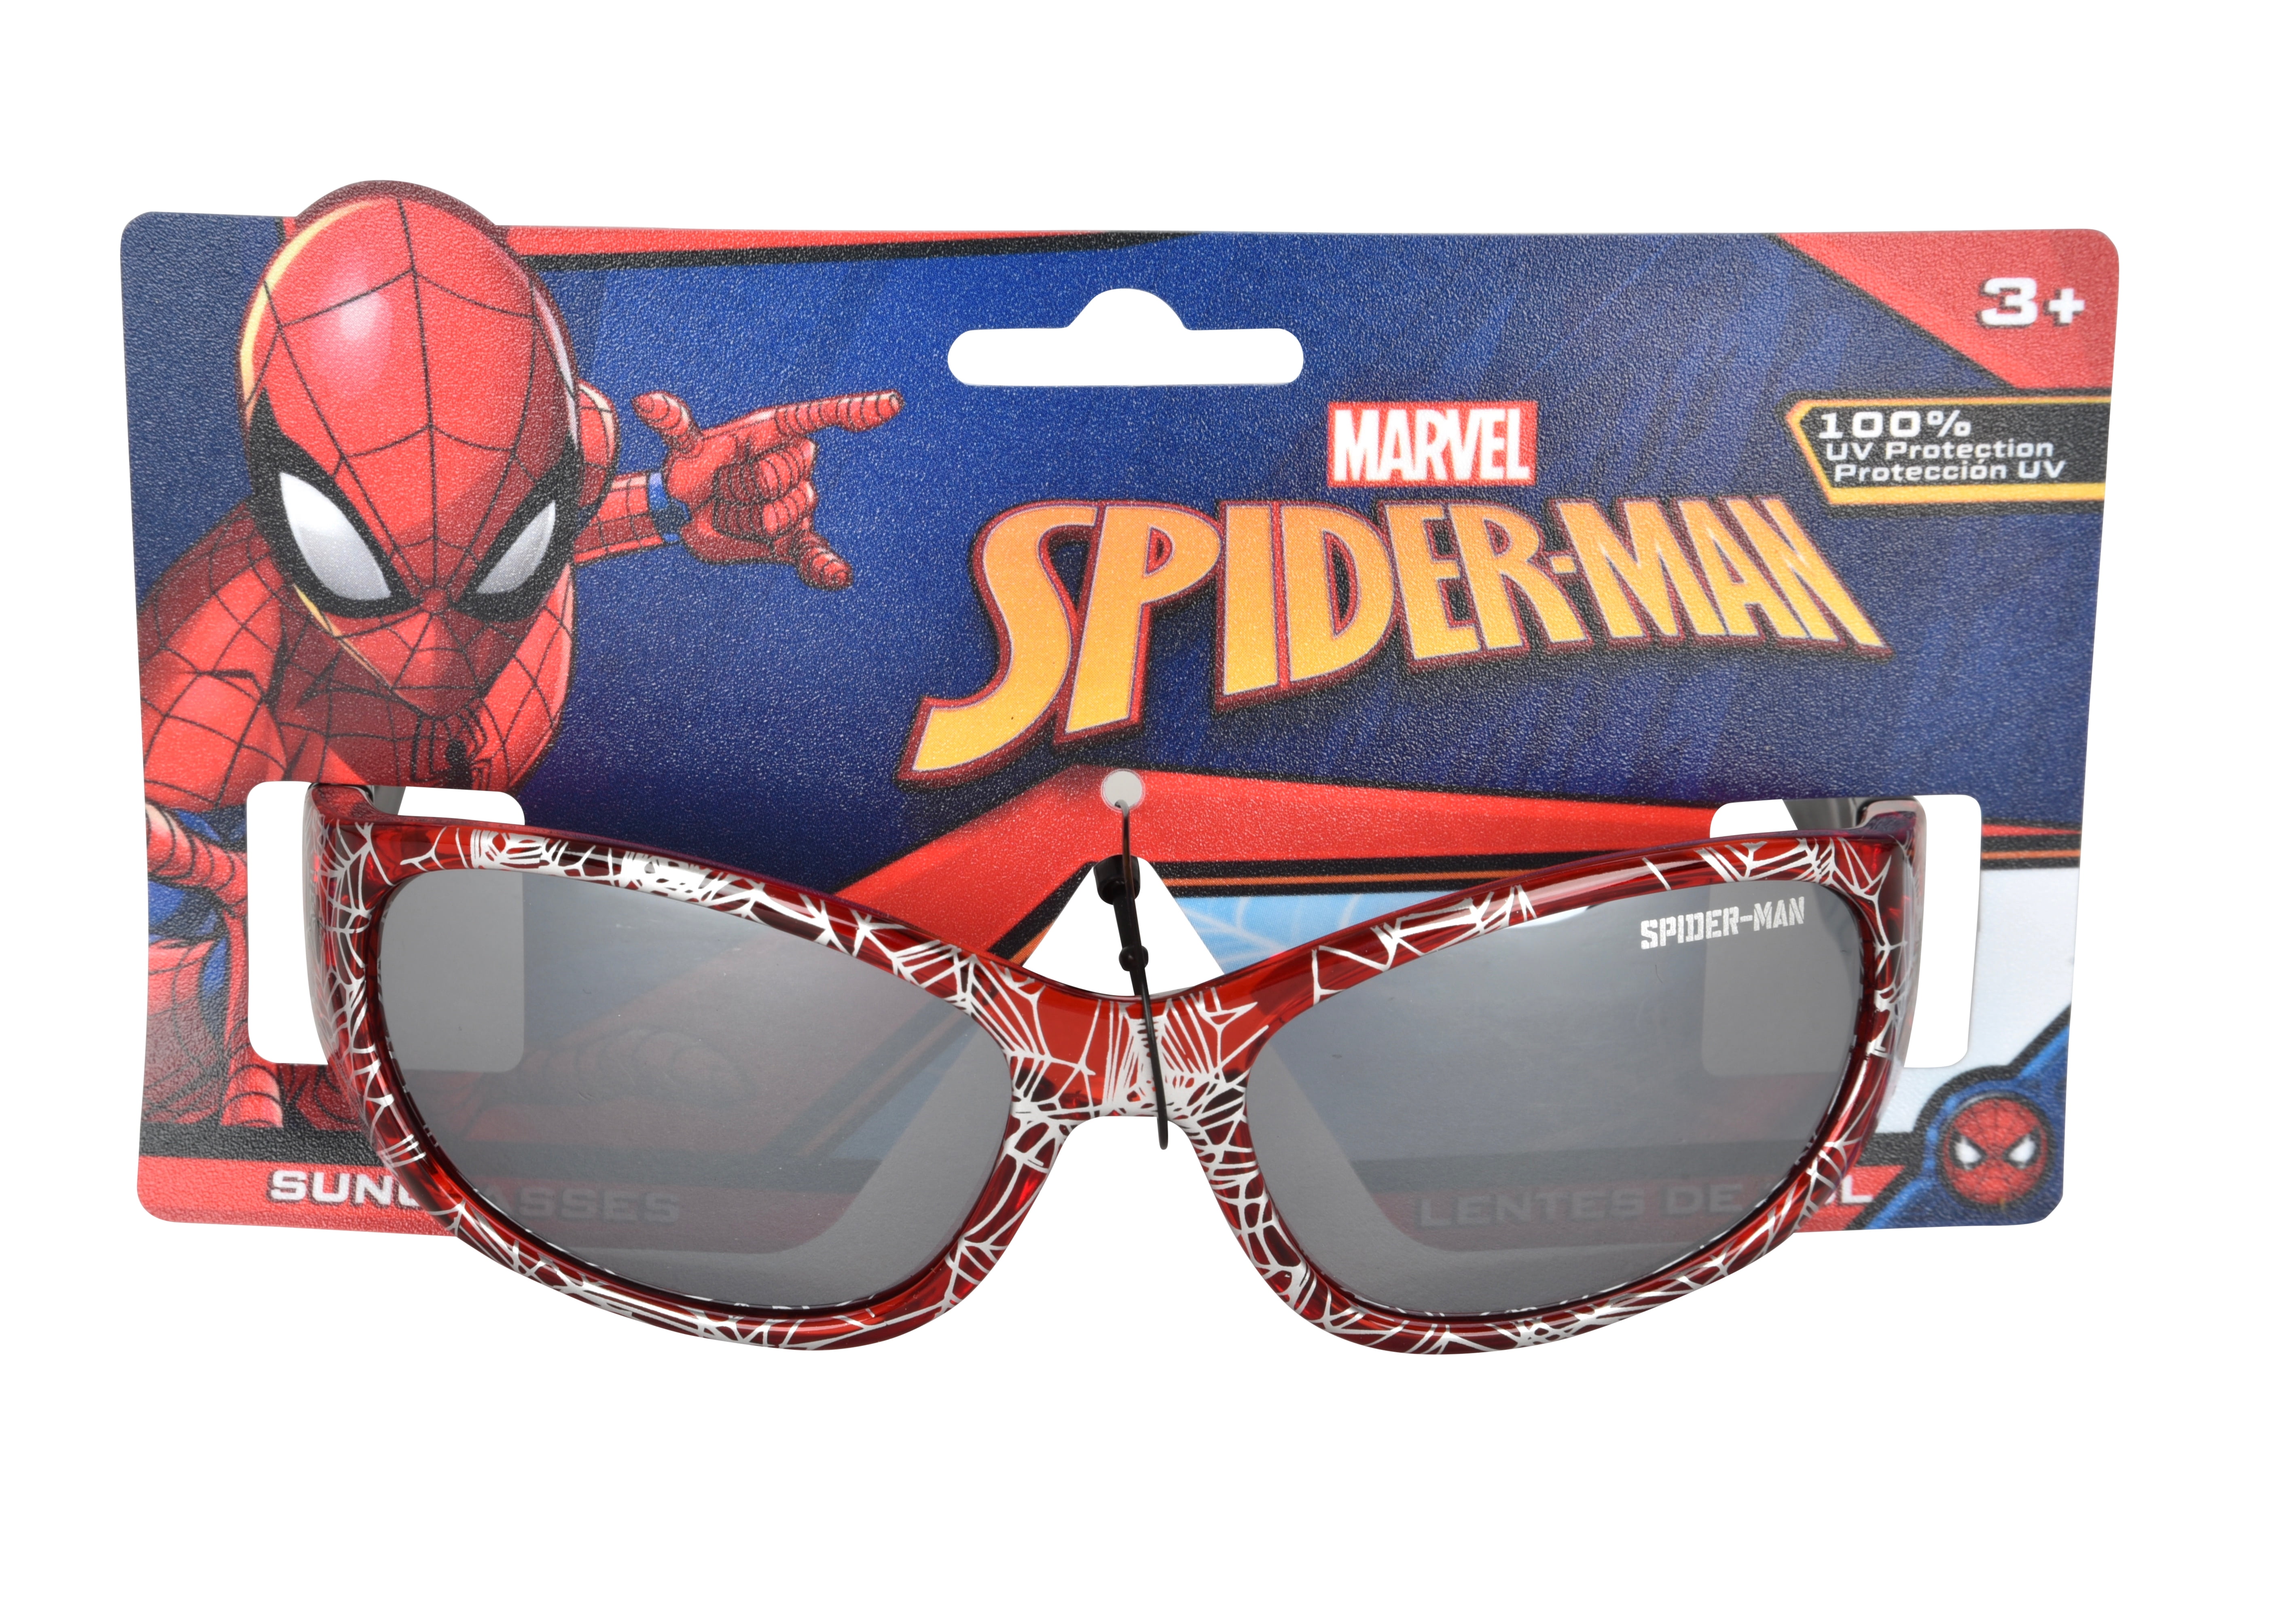 Kids MARVEL Spiderman Spider-man  Sunglasses 100% UVA And UVB Protection 3 NEW 